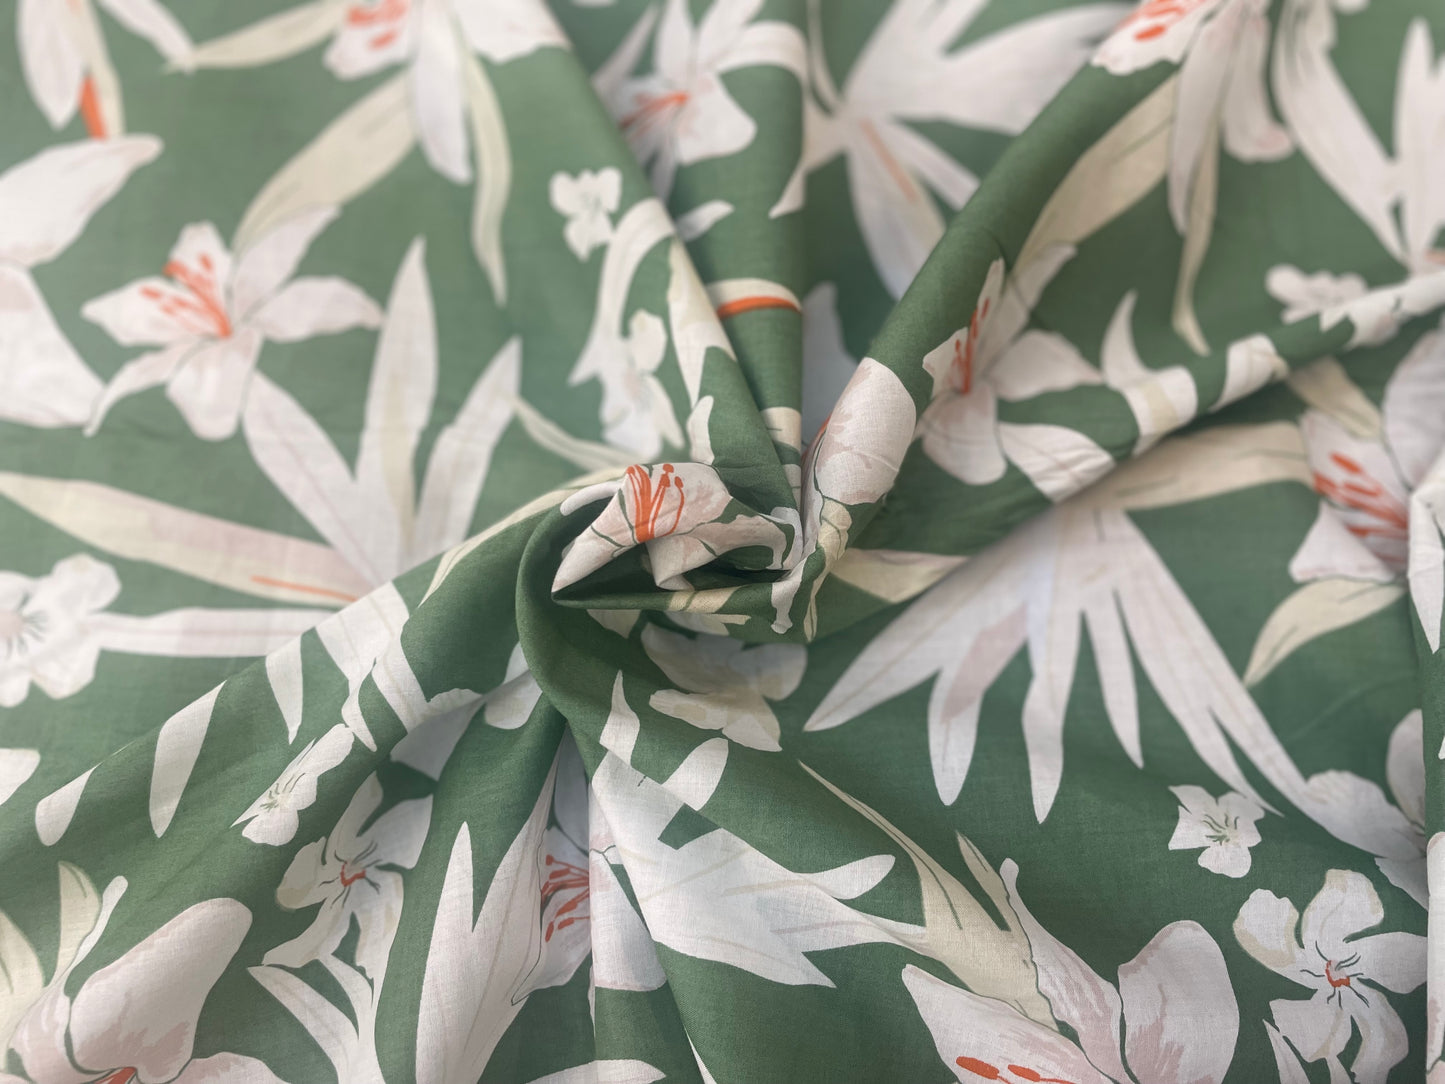 Floral Printed Lightweight Cotton - Green, White & Orange